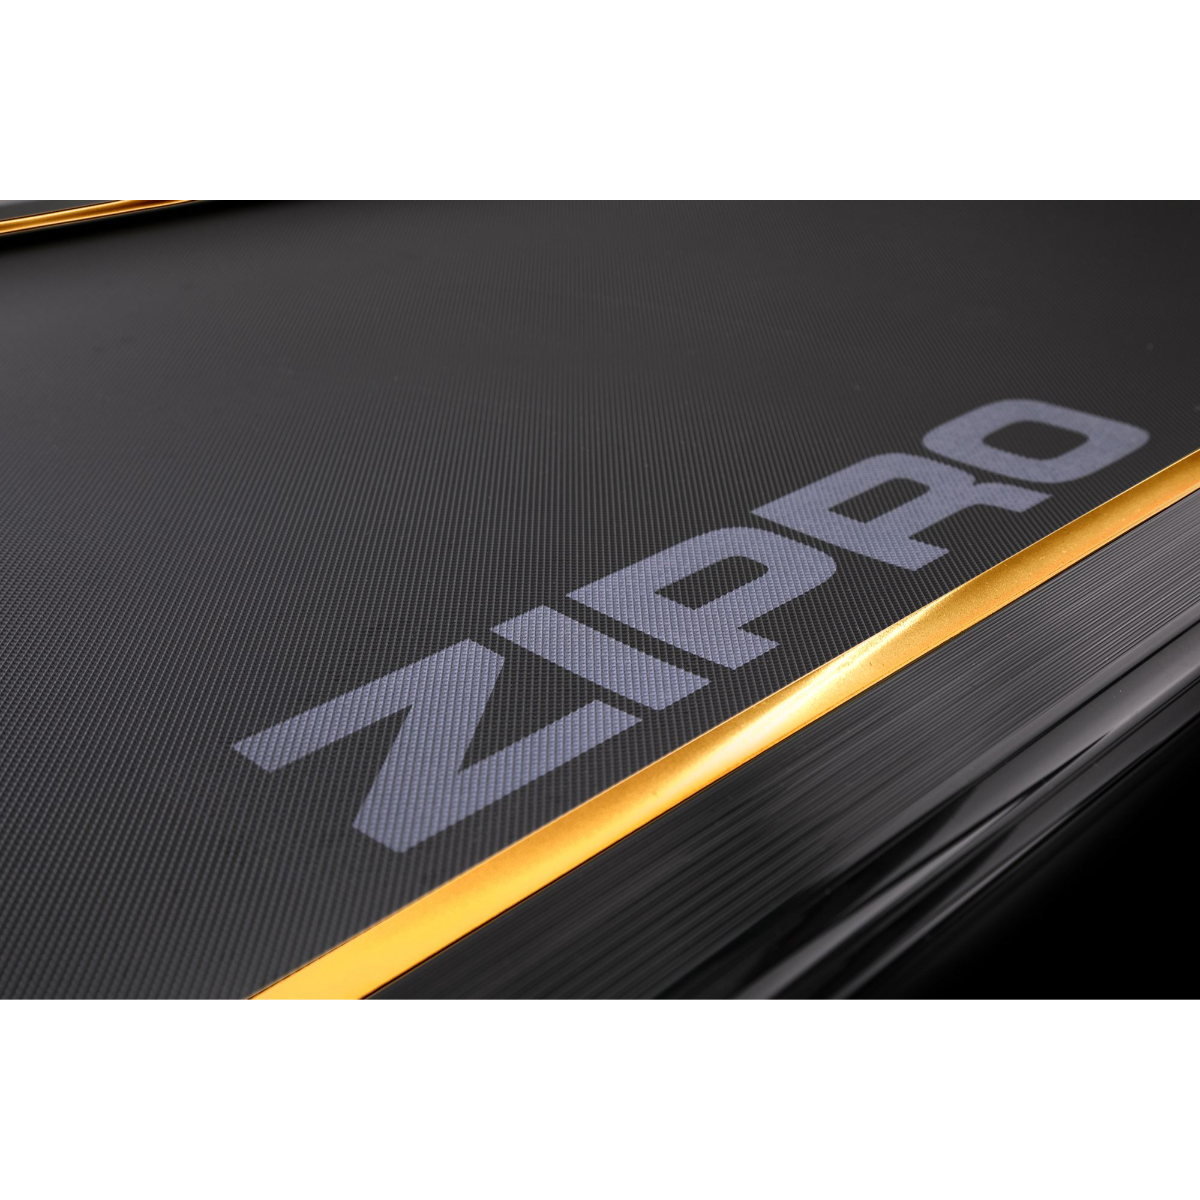 ZIPRO Gold Laufband, Schawrz iConsole+ Pacemaker